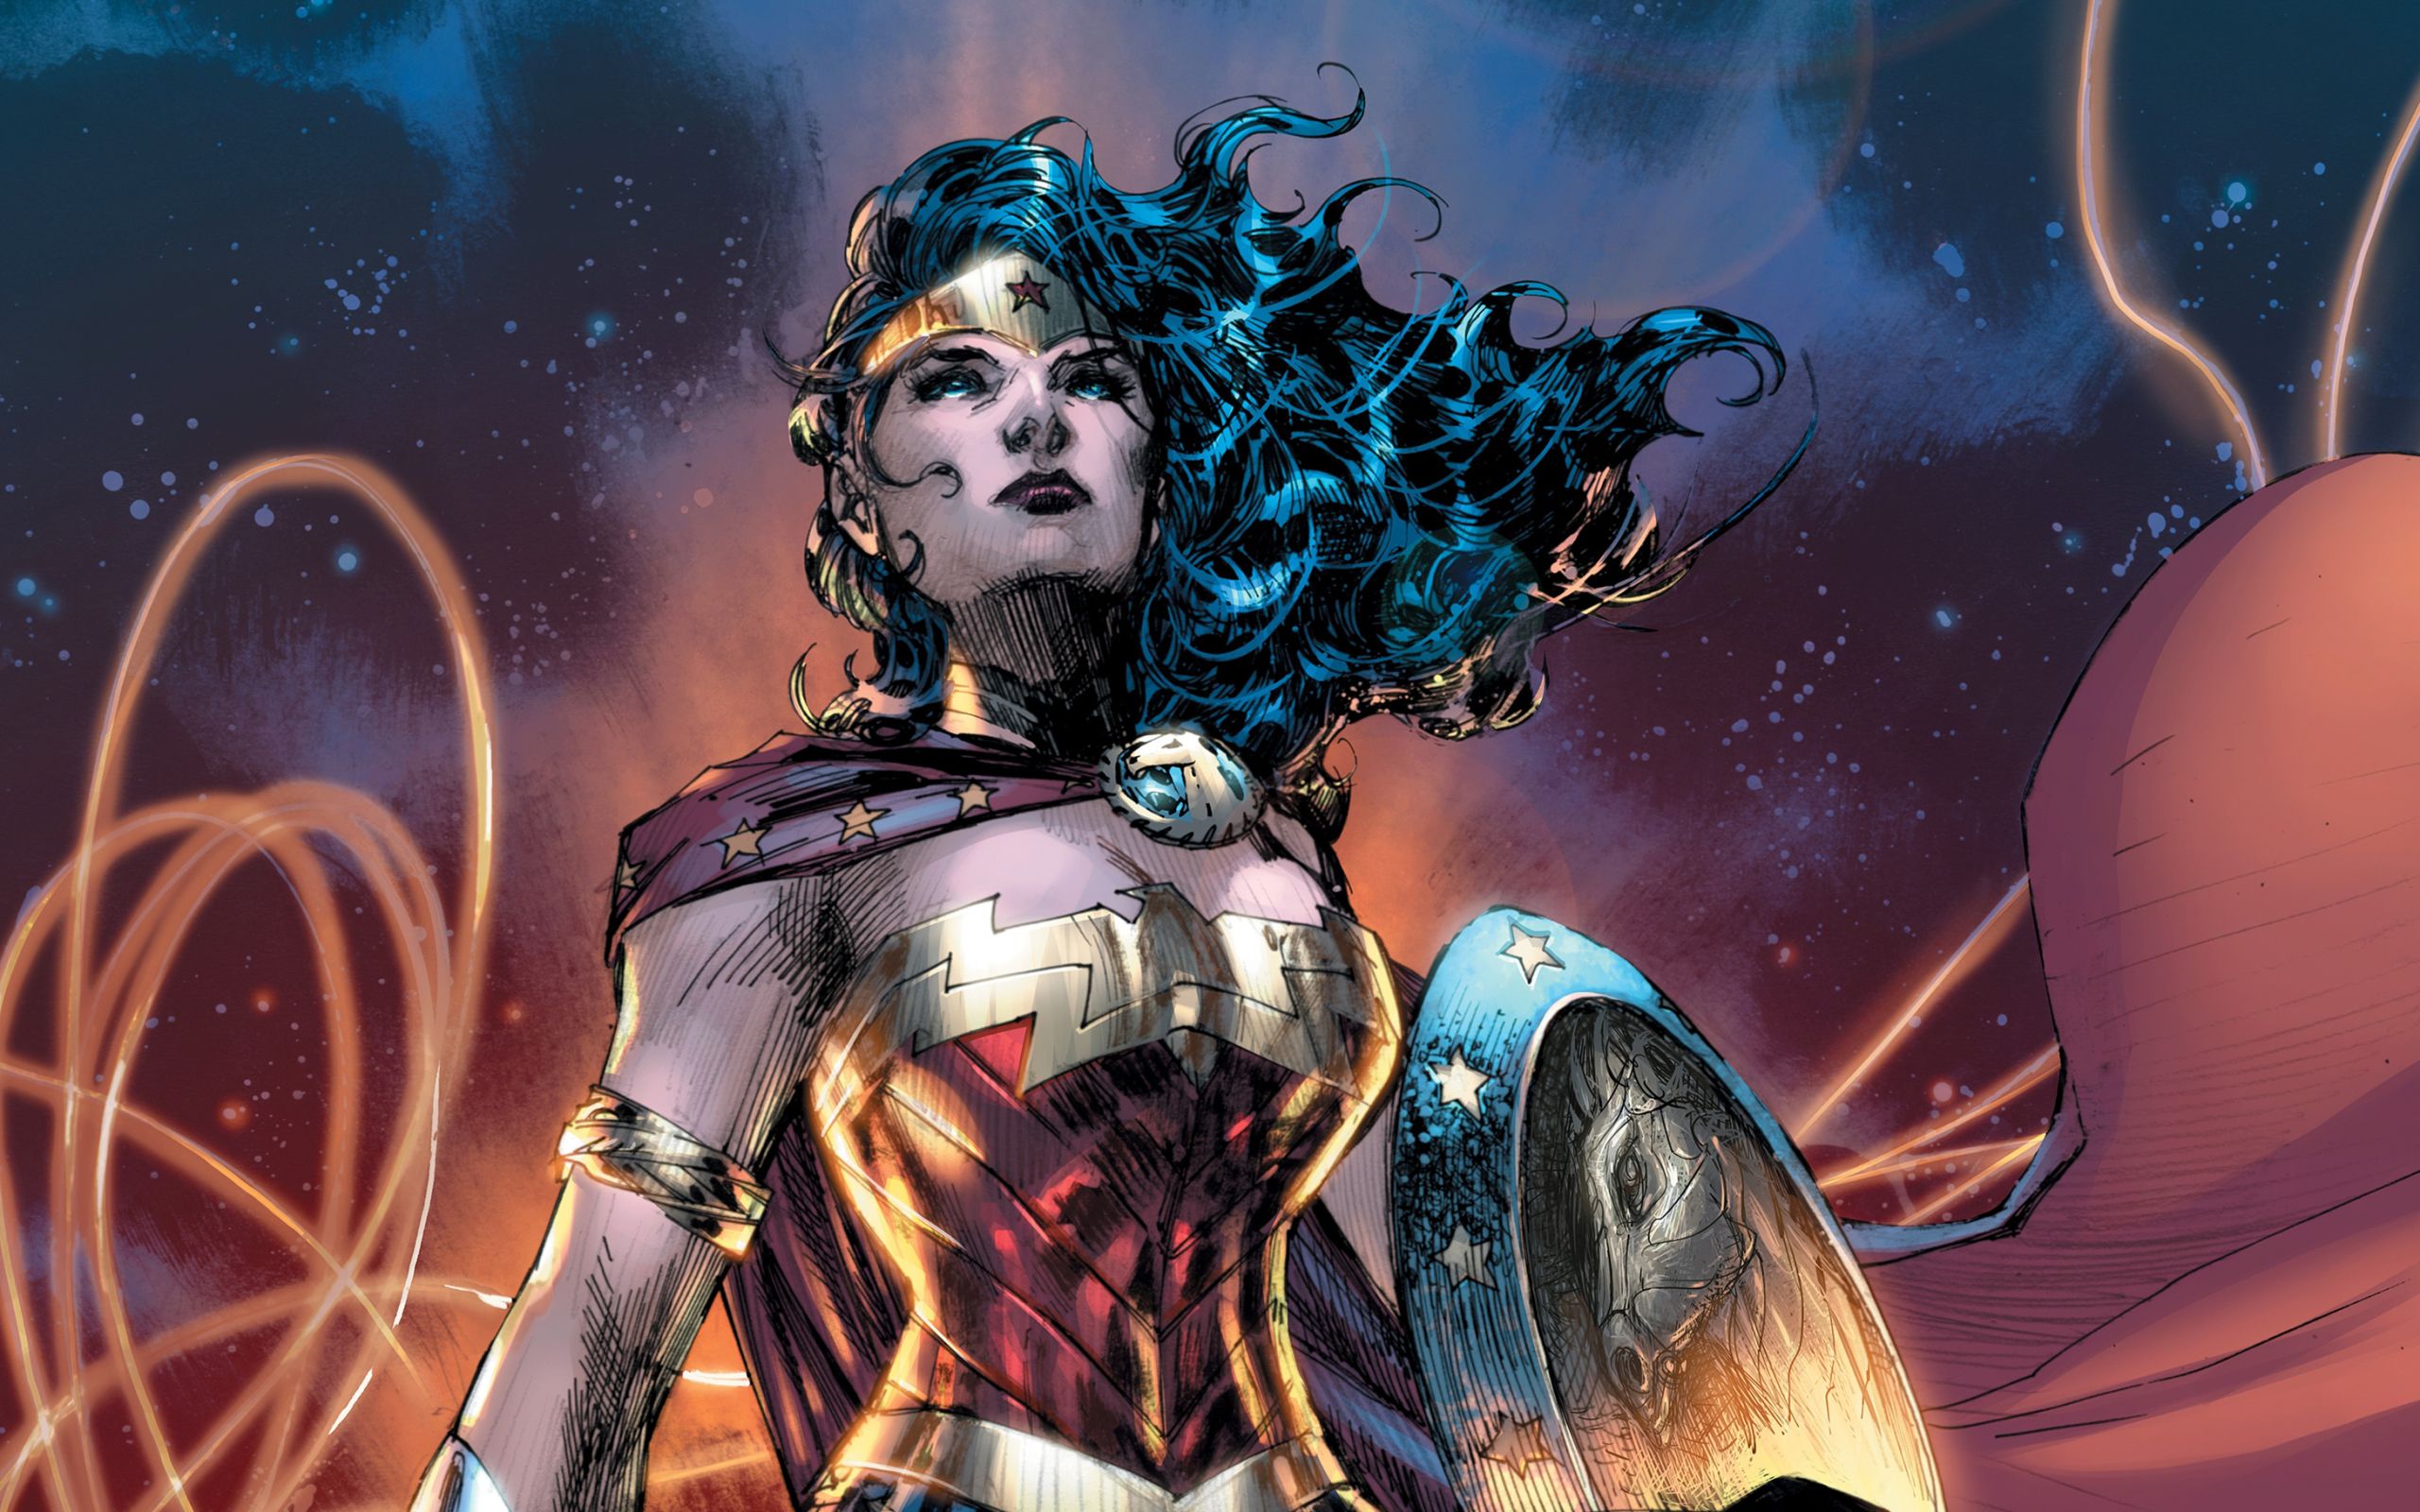 Dc Wonder Woman Superhero Wallpapers